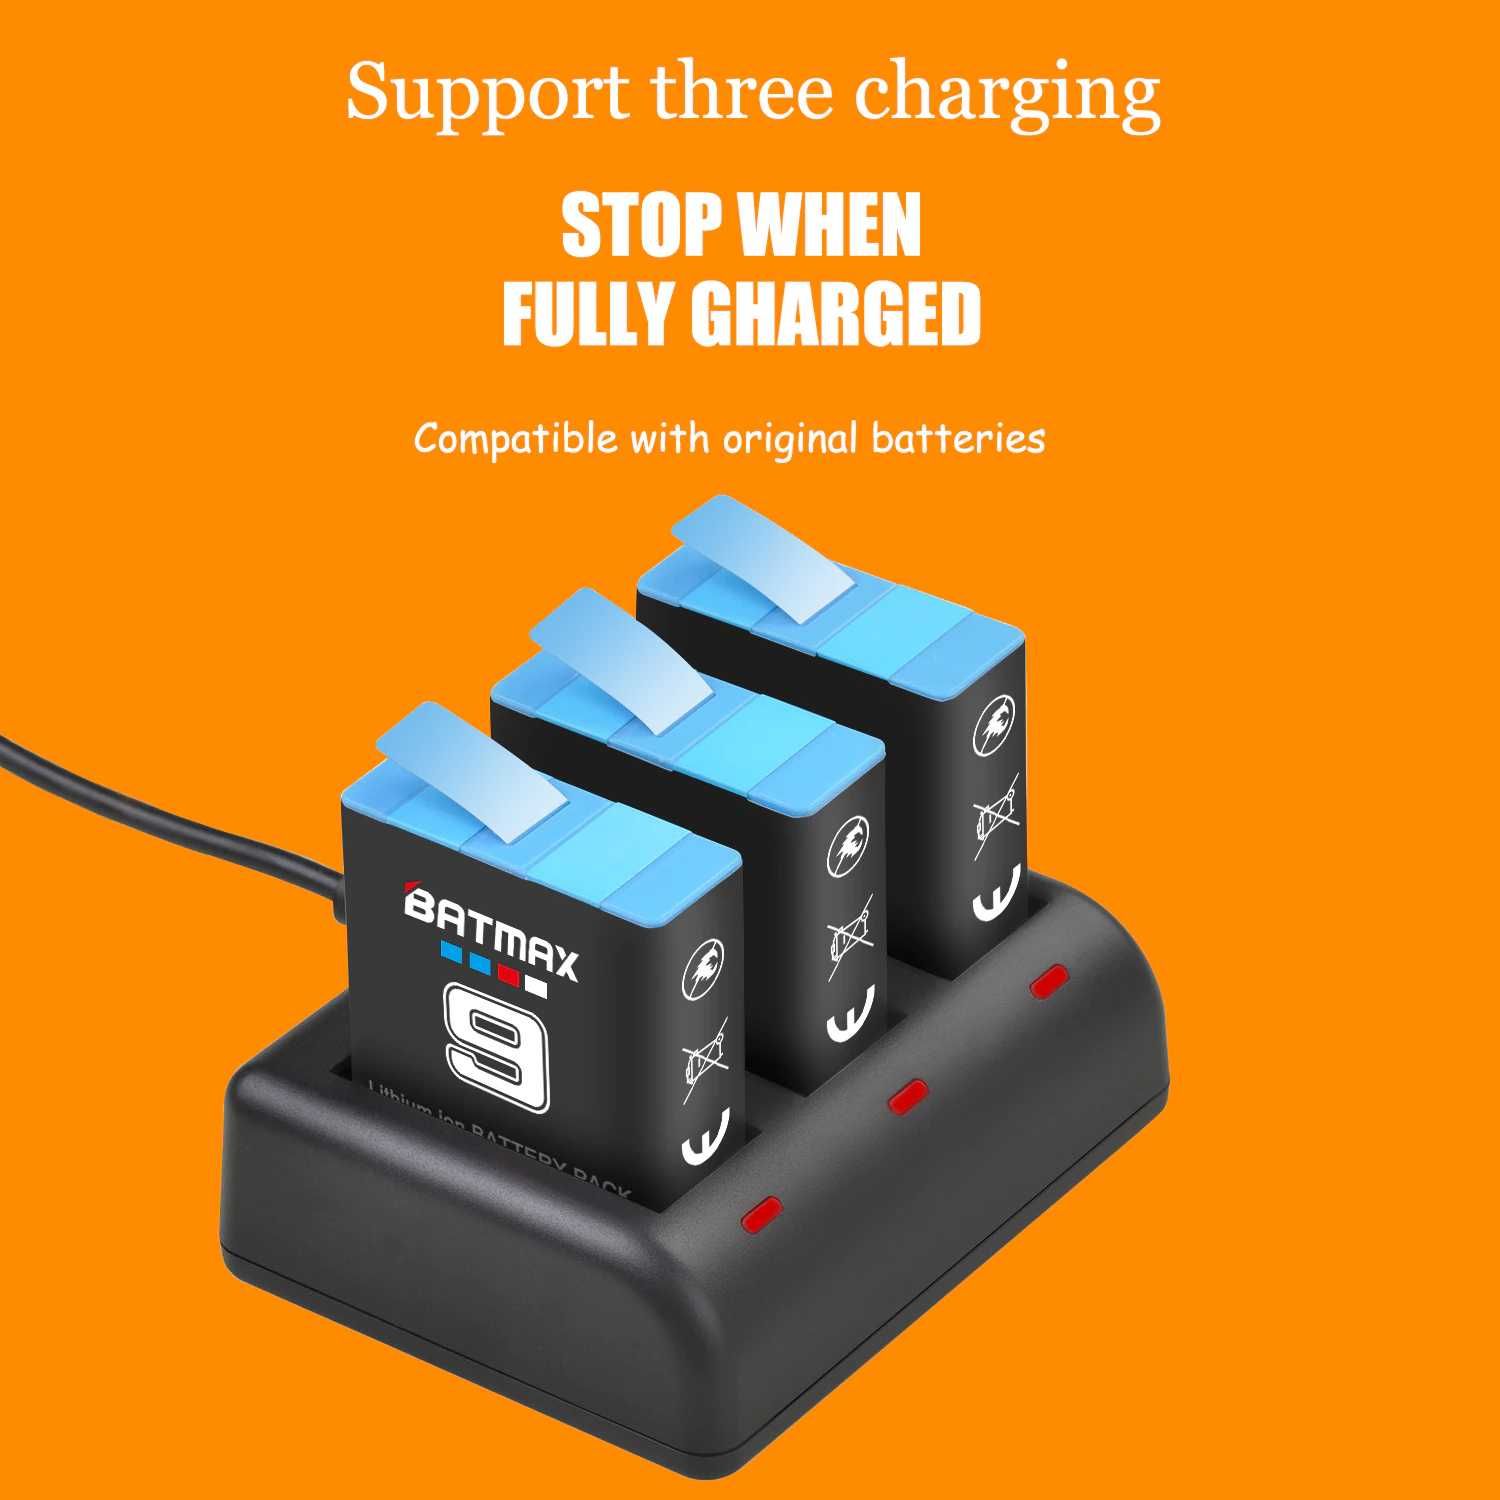 Тройно смарт зарядно за батерии AHDBT-901 за GoPro Hero 9 10 11 12